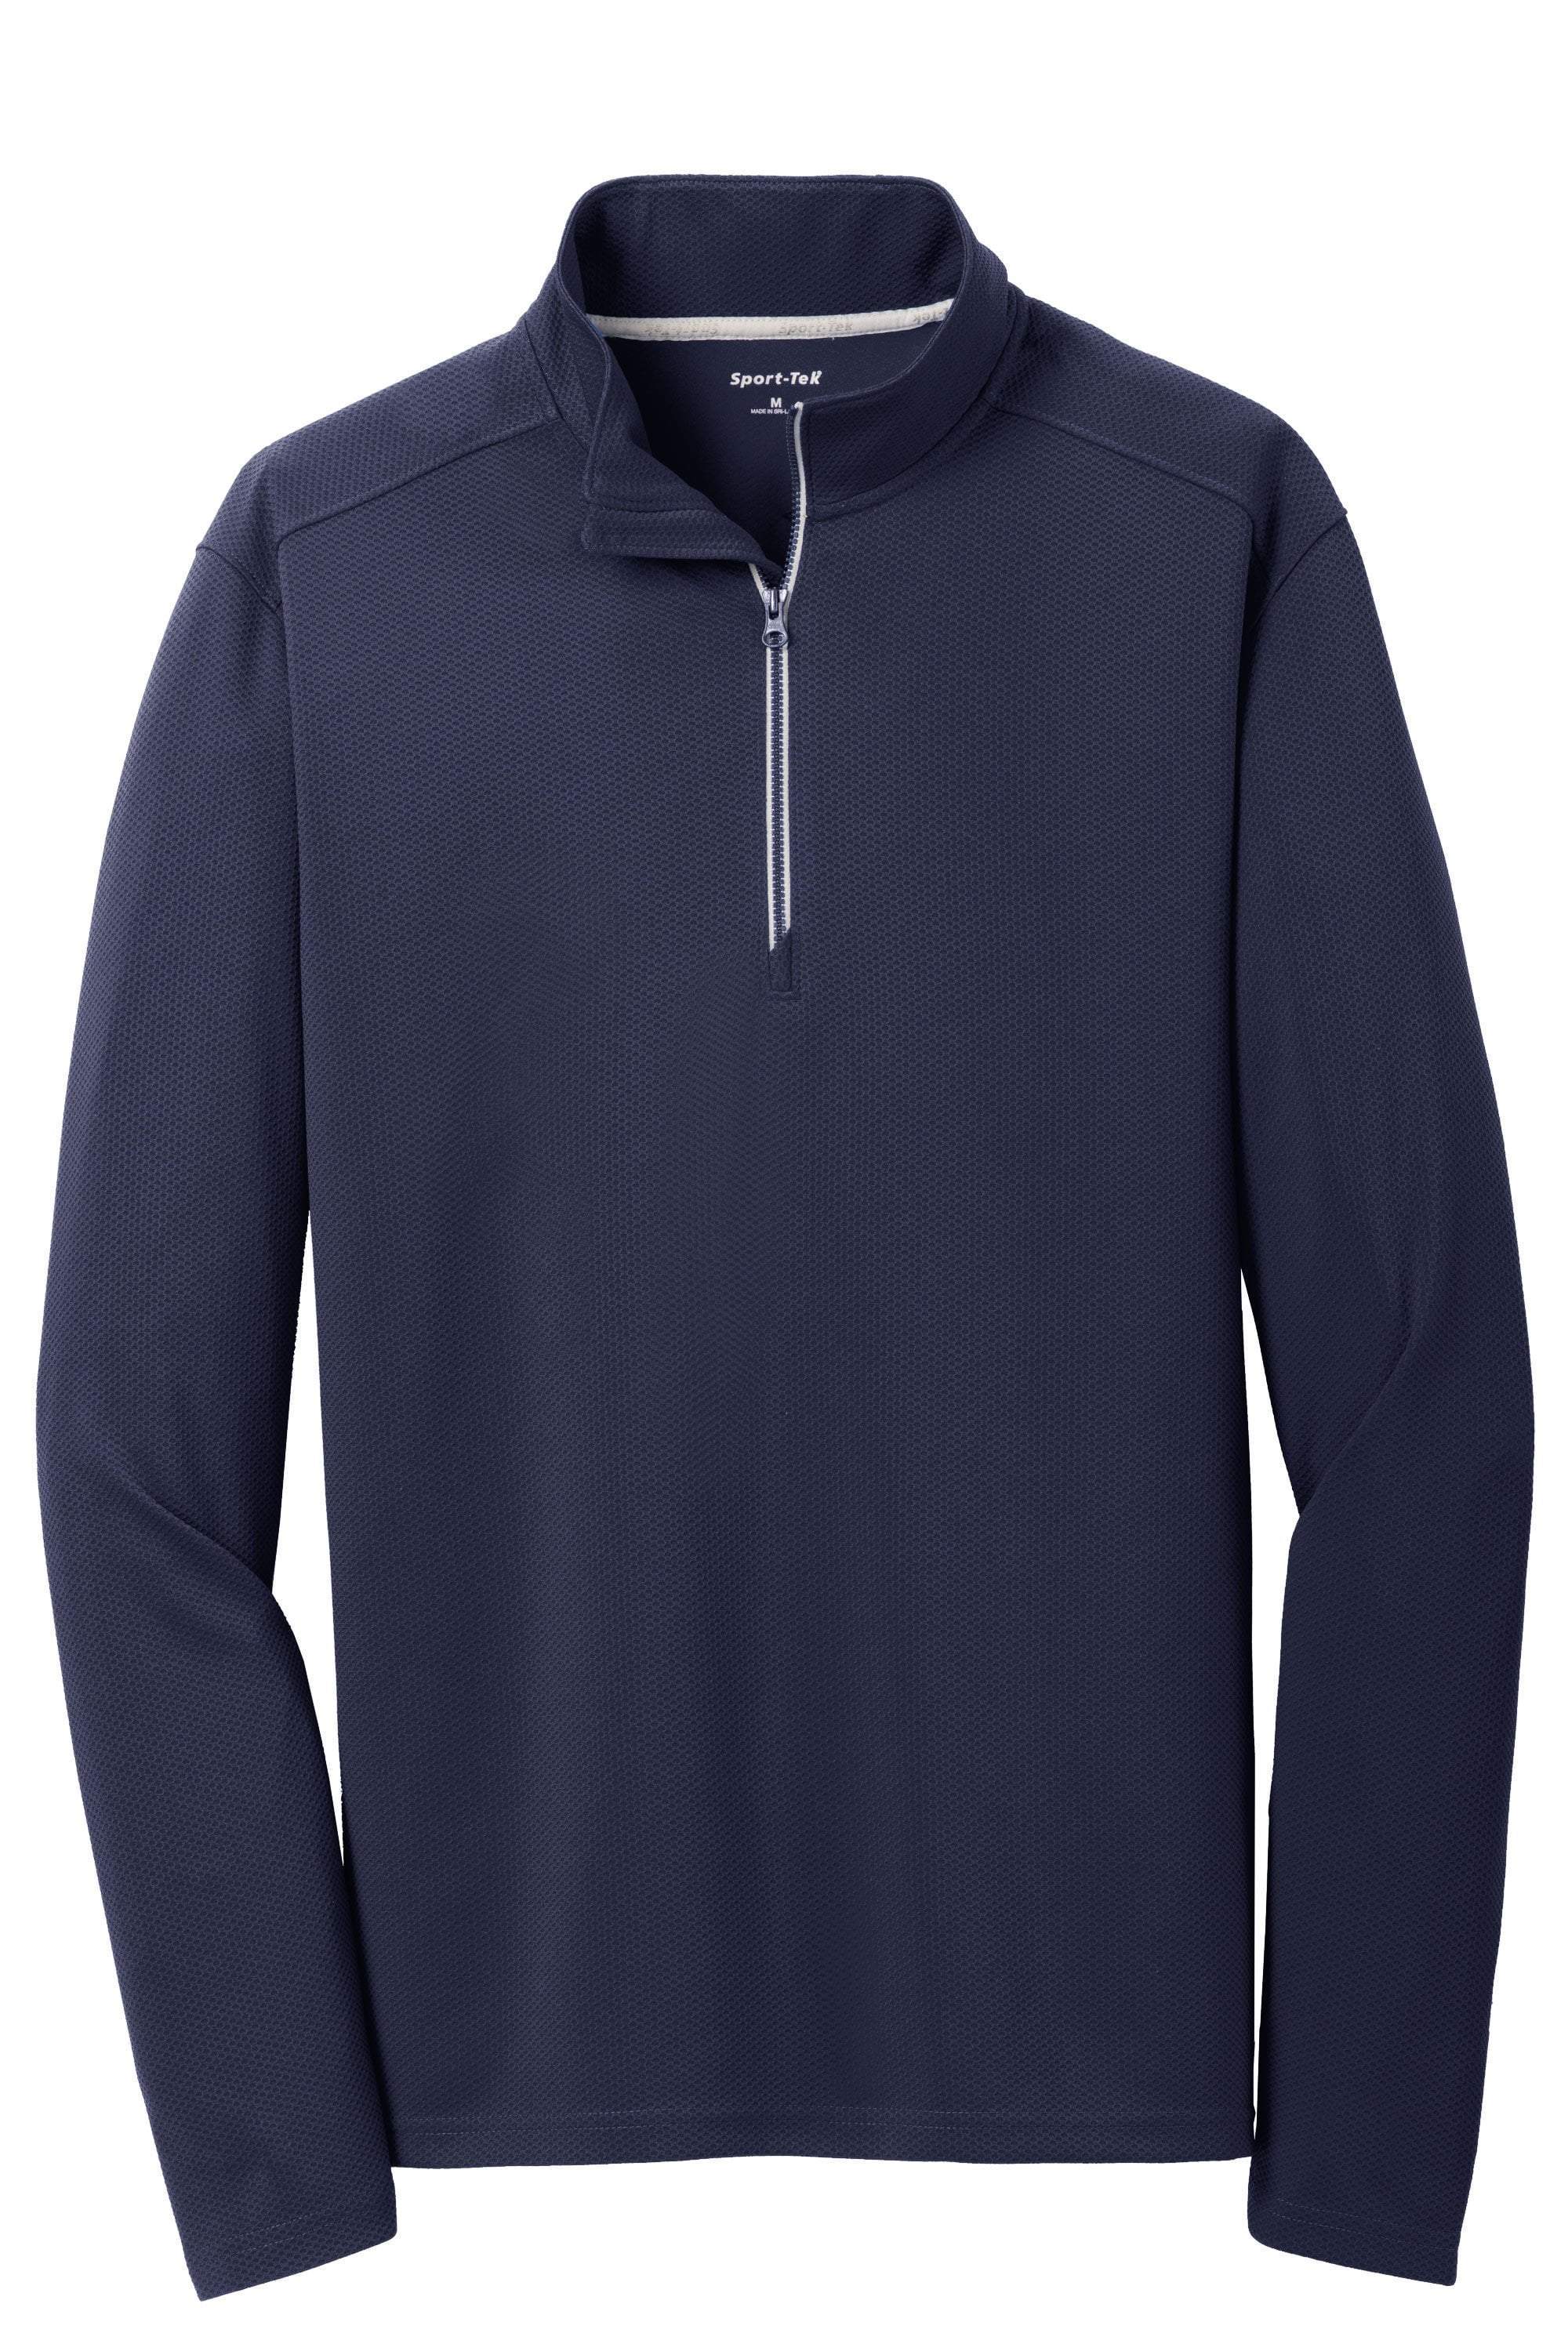 ST860 | Sport-Tek® Pullover 1/4-Zip | Unisex Textured Sport-Wick® MacAttackGear